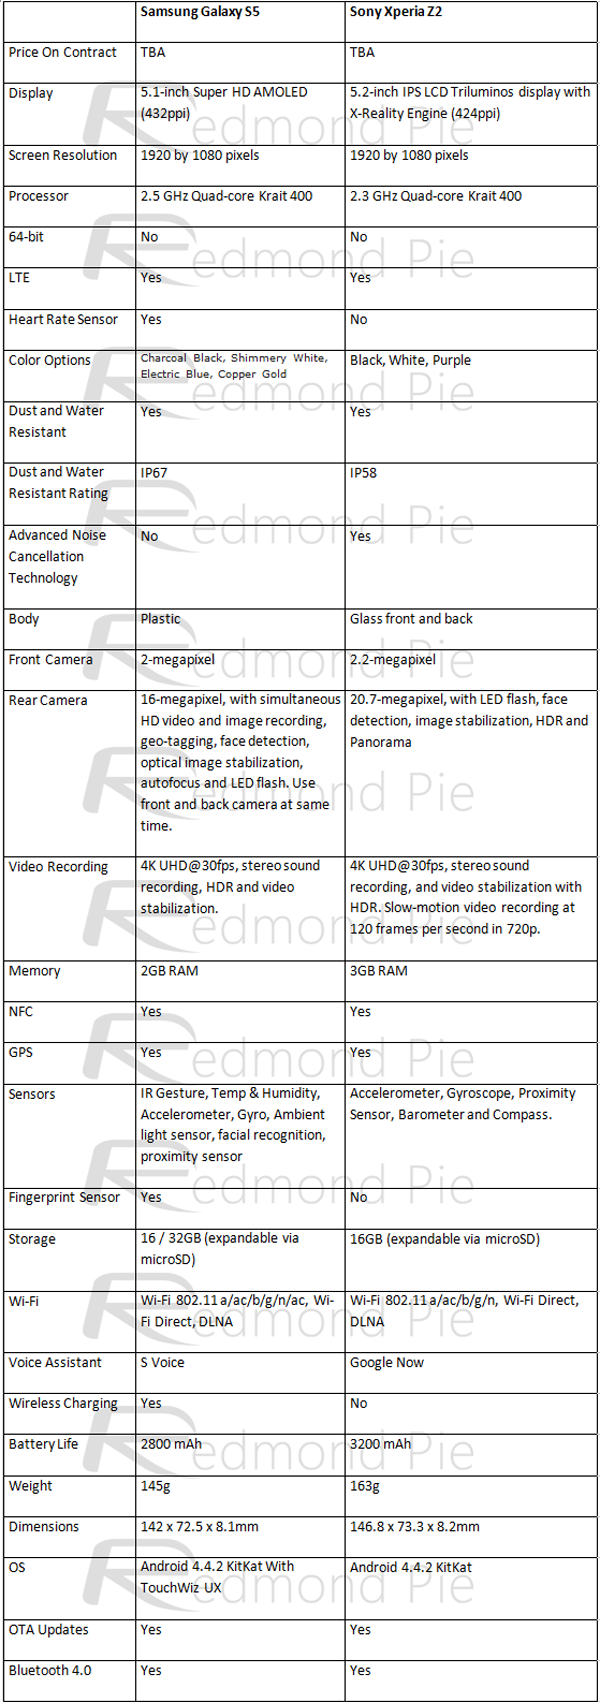 GalaxyS5 vs XperiaZ2 comparison chart